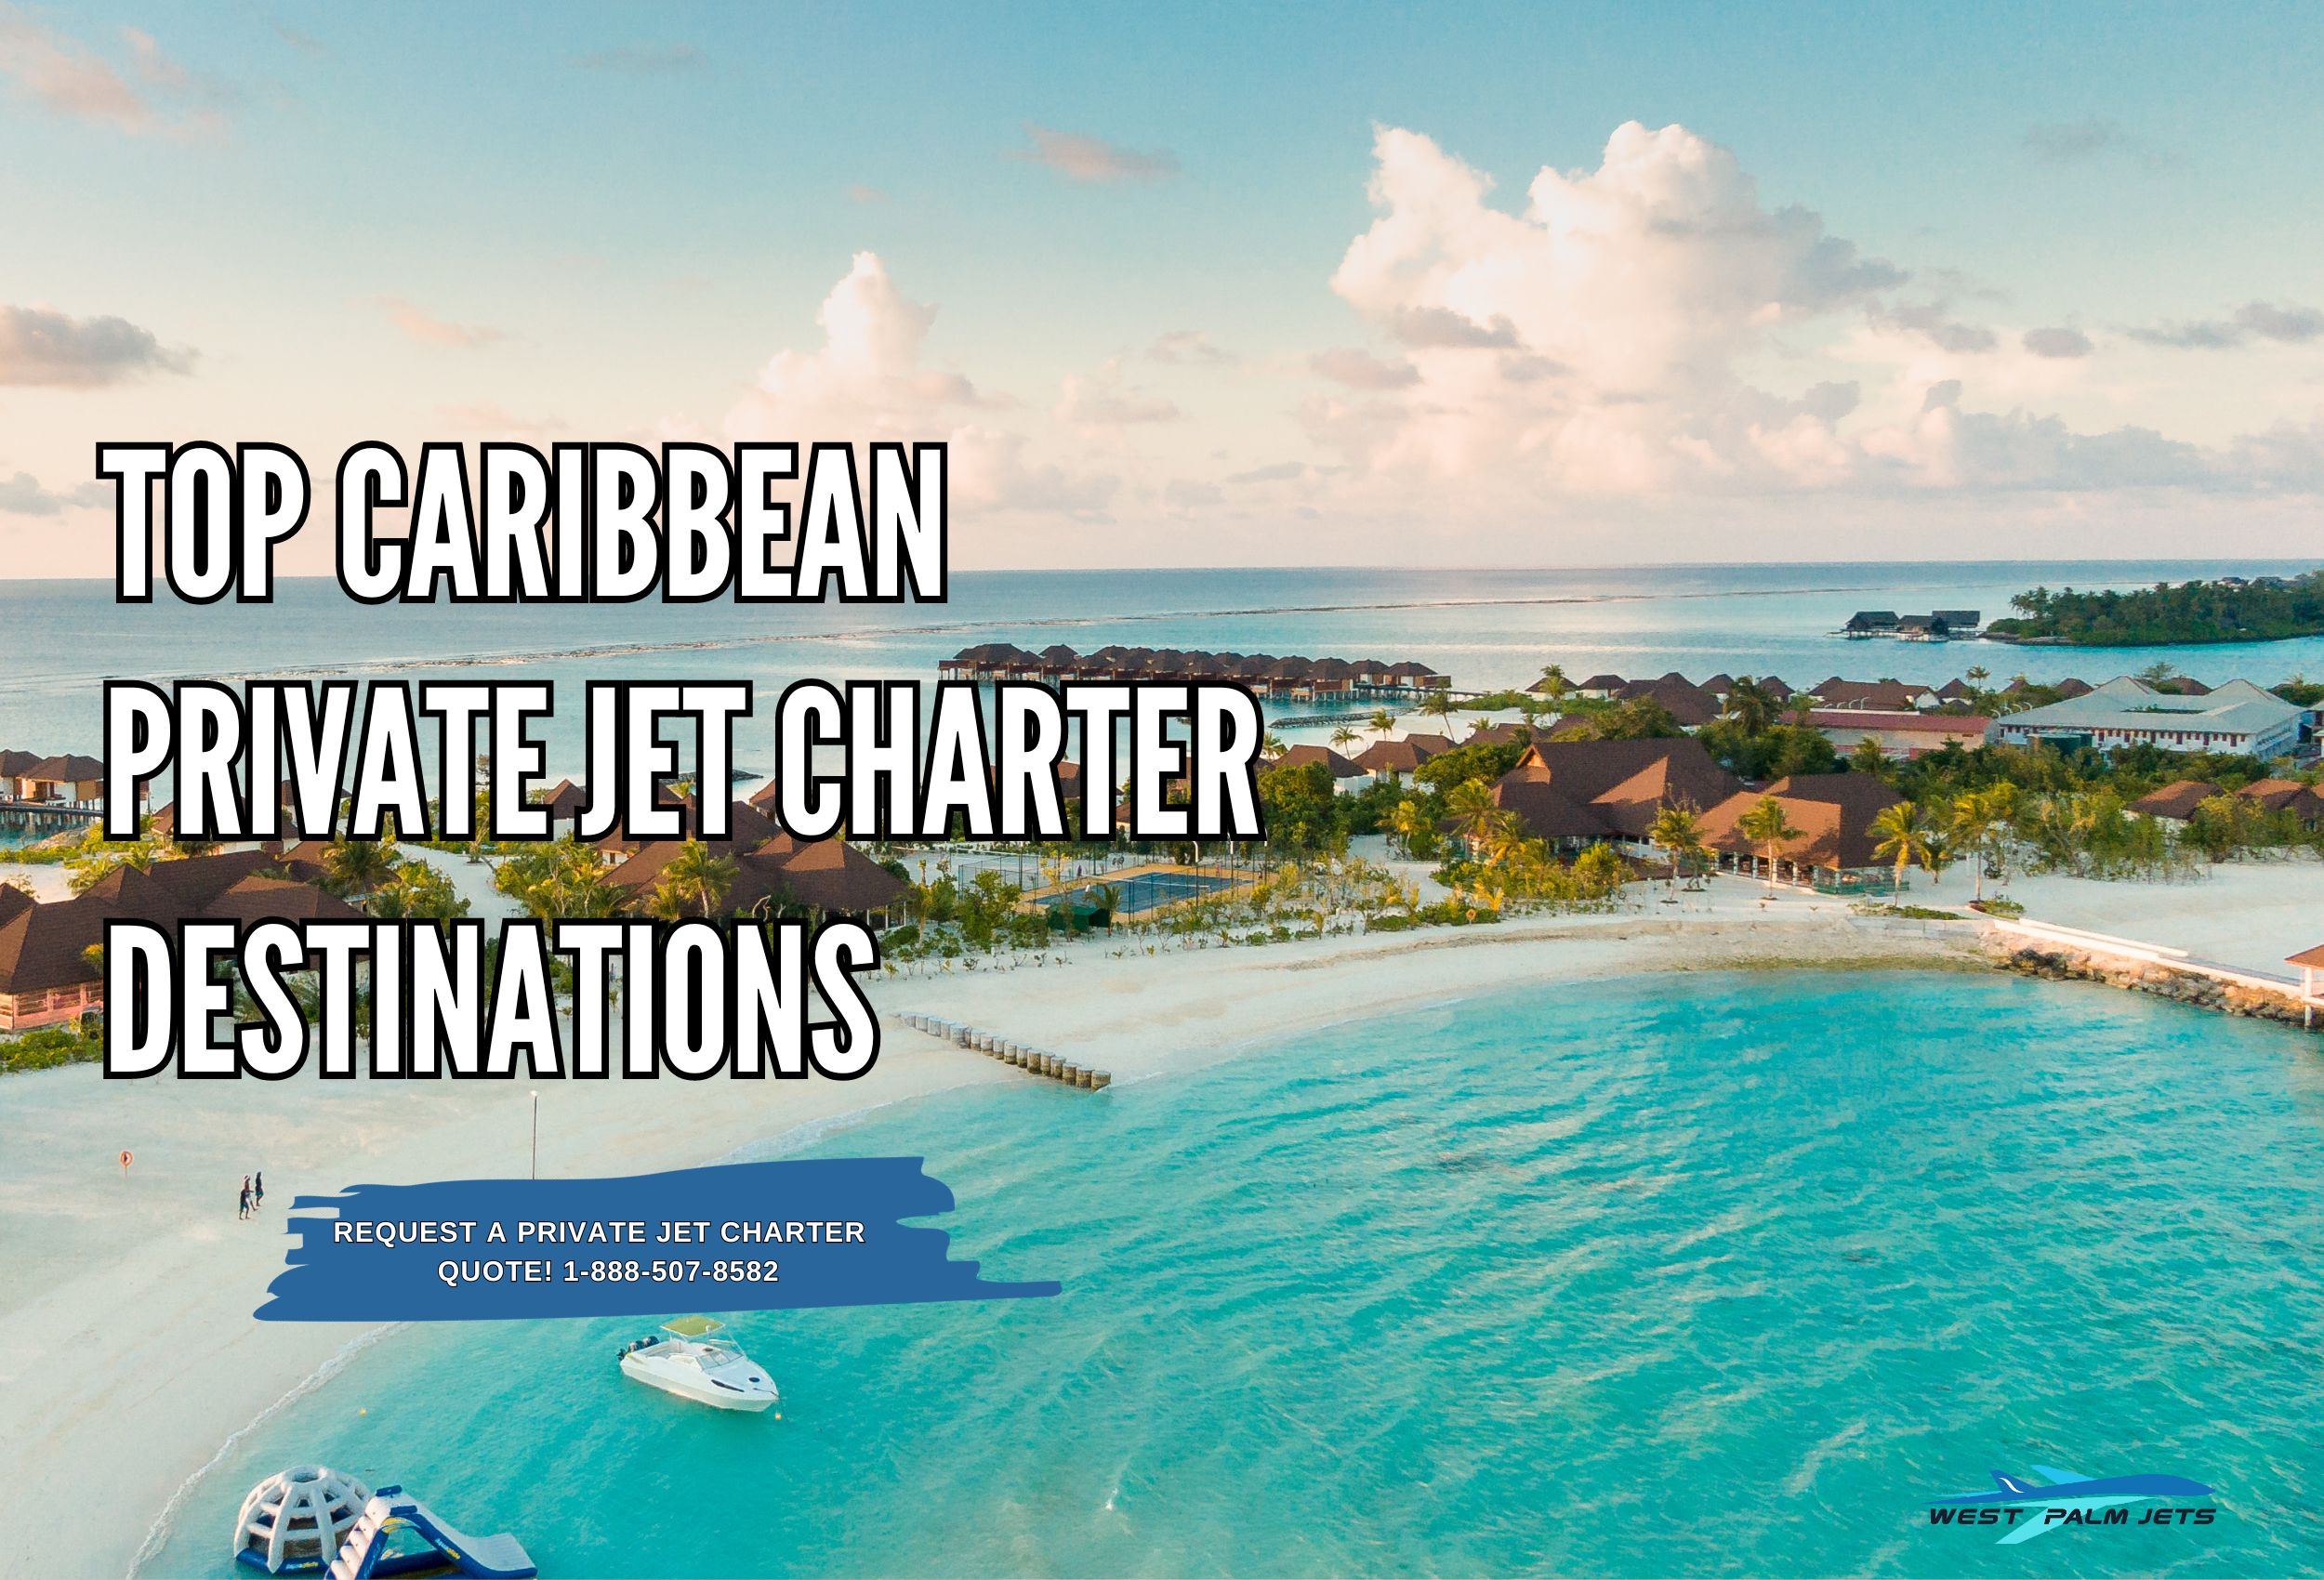 Top Caribbean Private Jet Charter Destinations